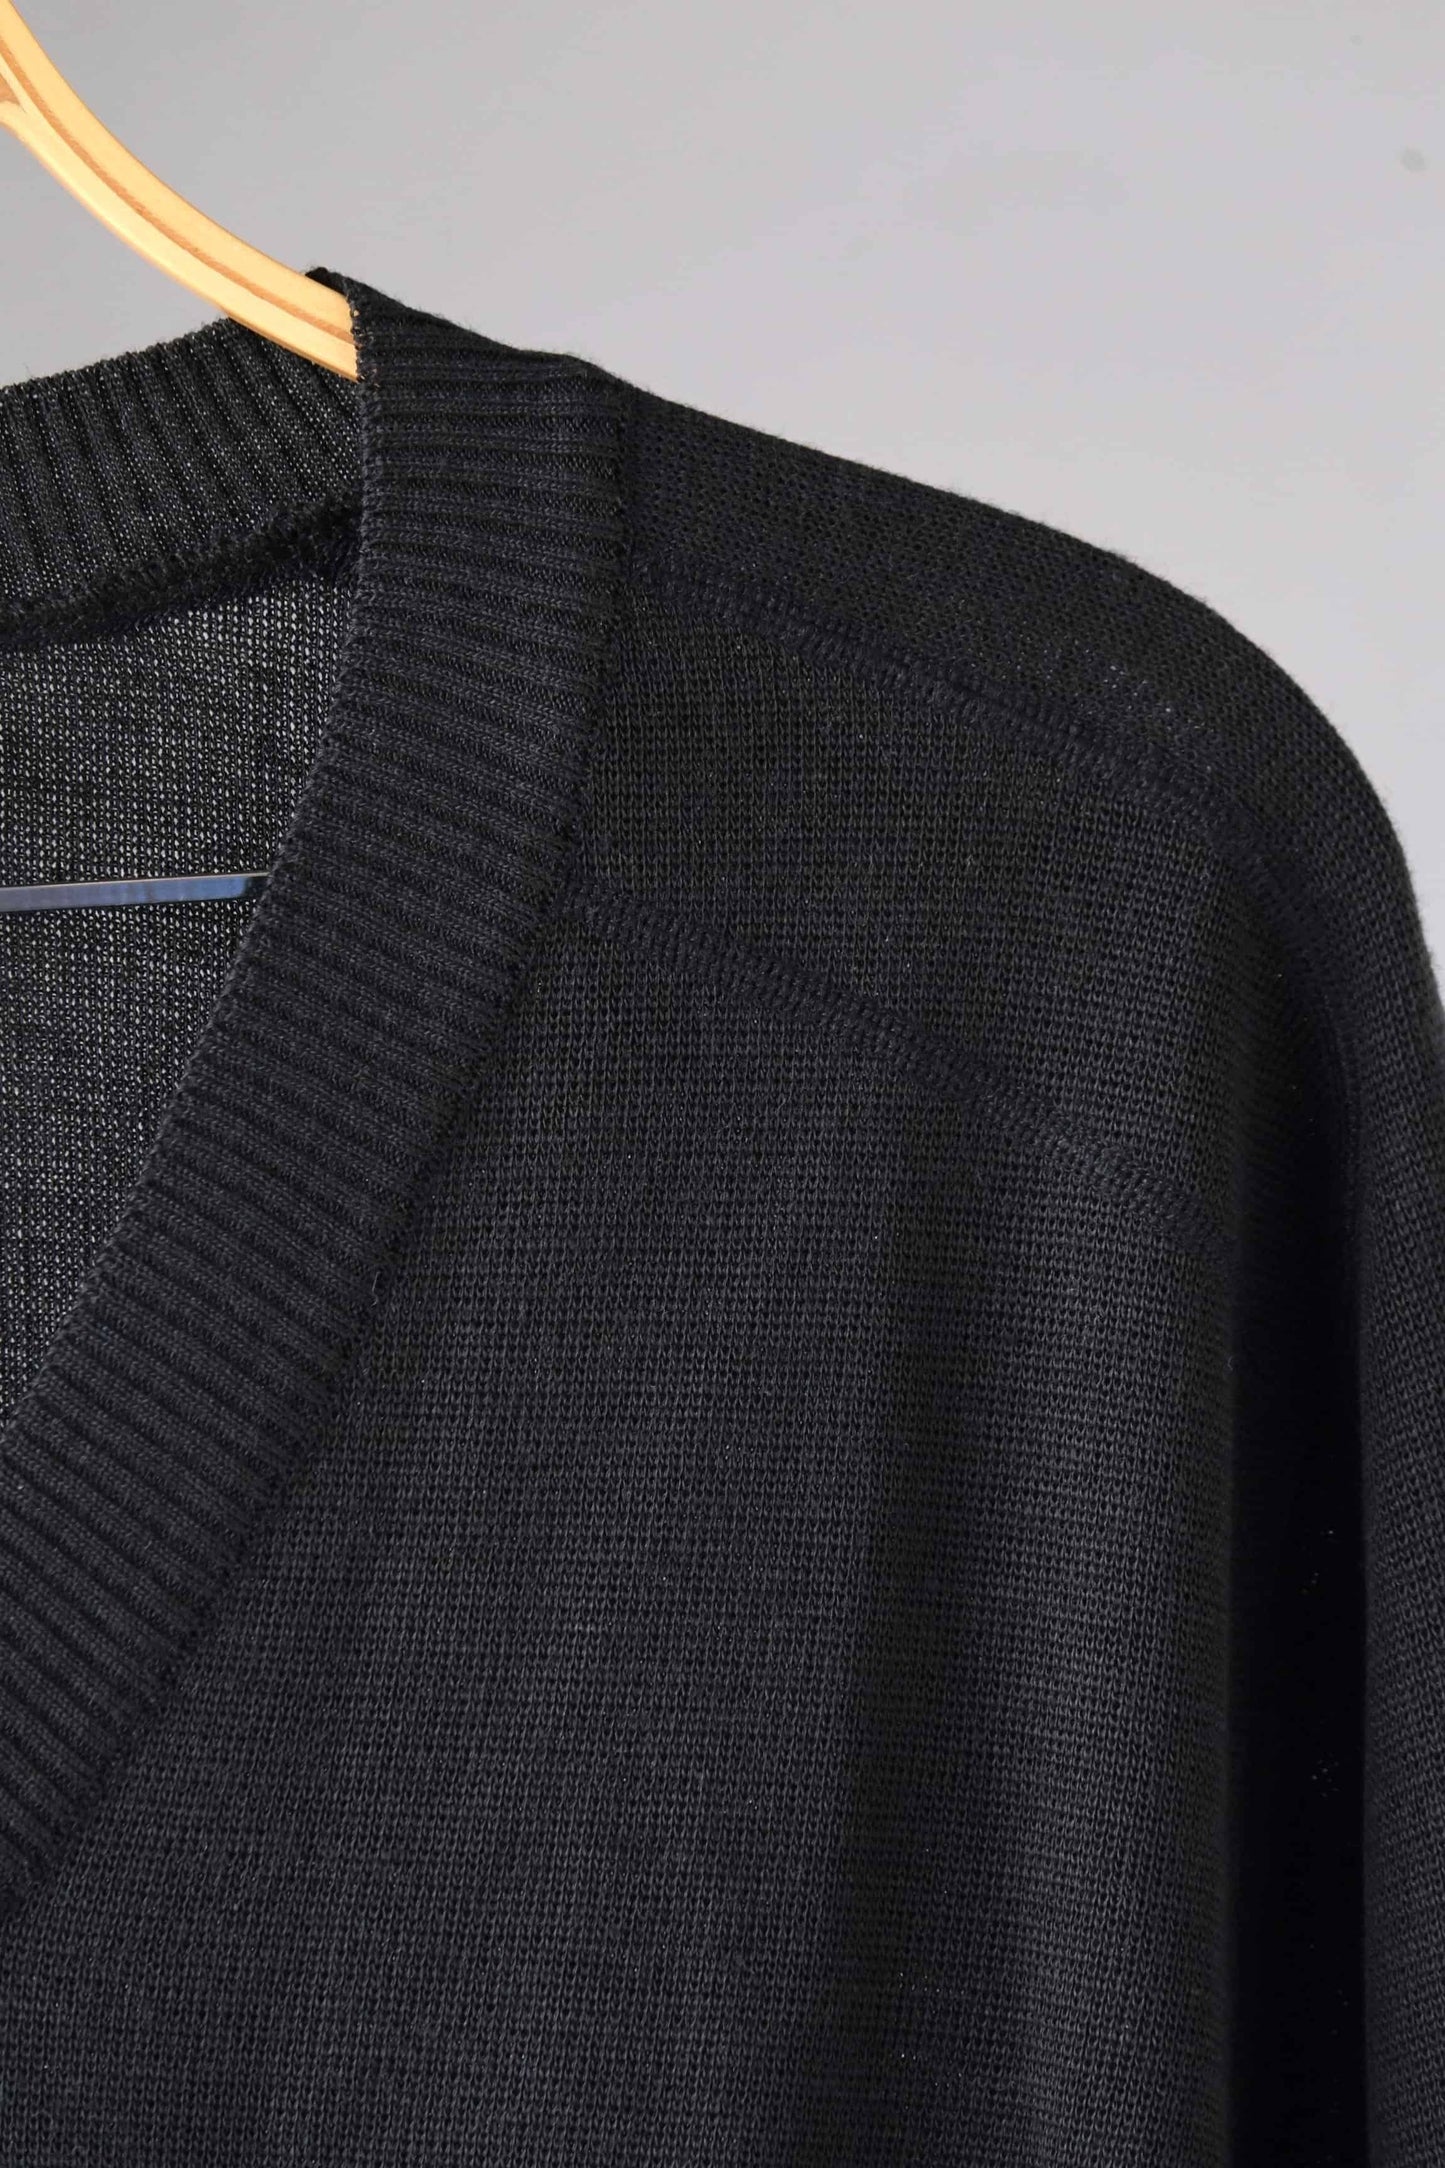 80's Black V-Neck Sweater closeup